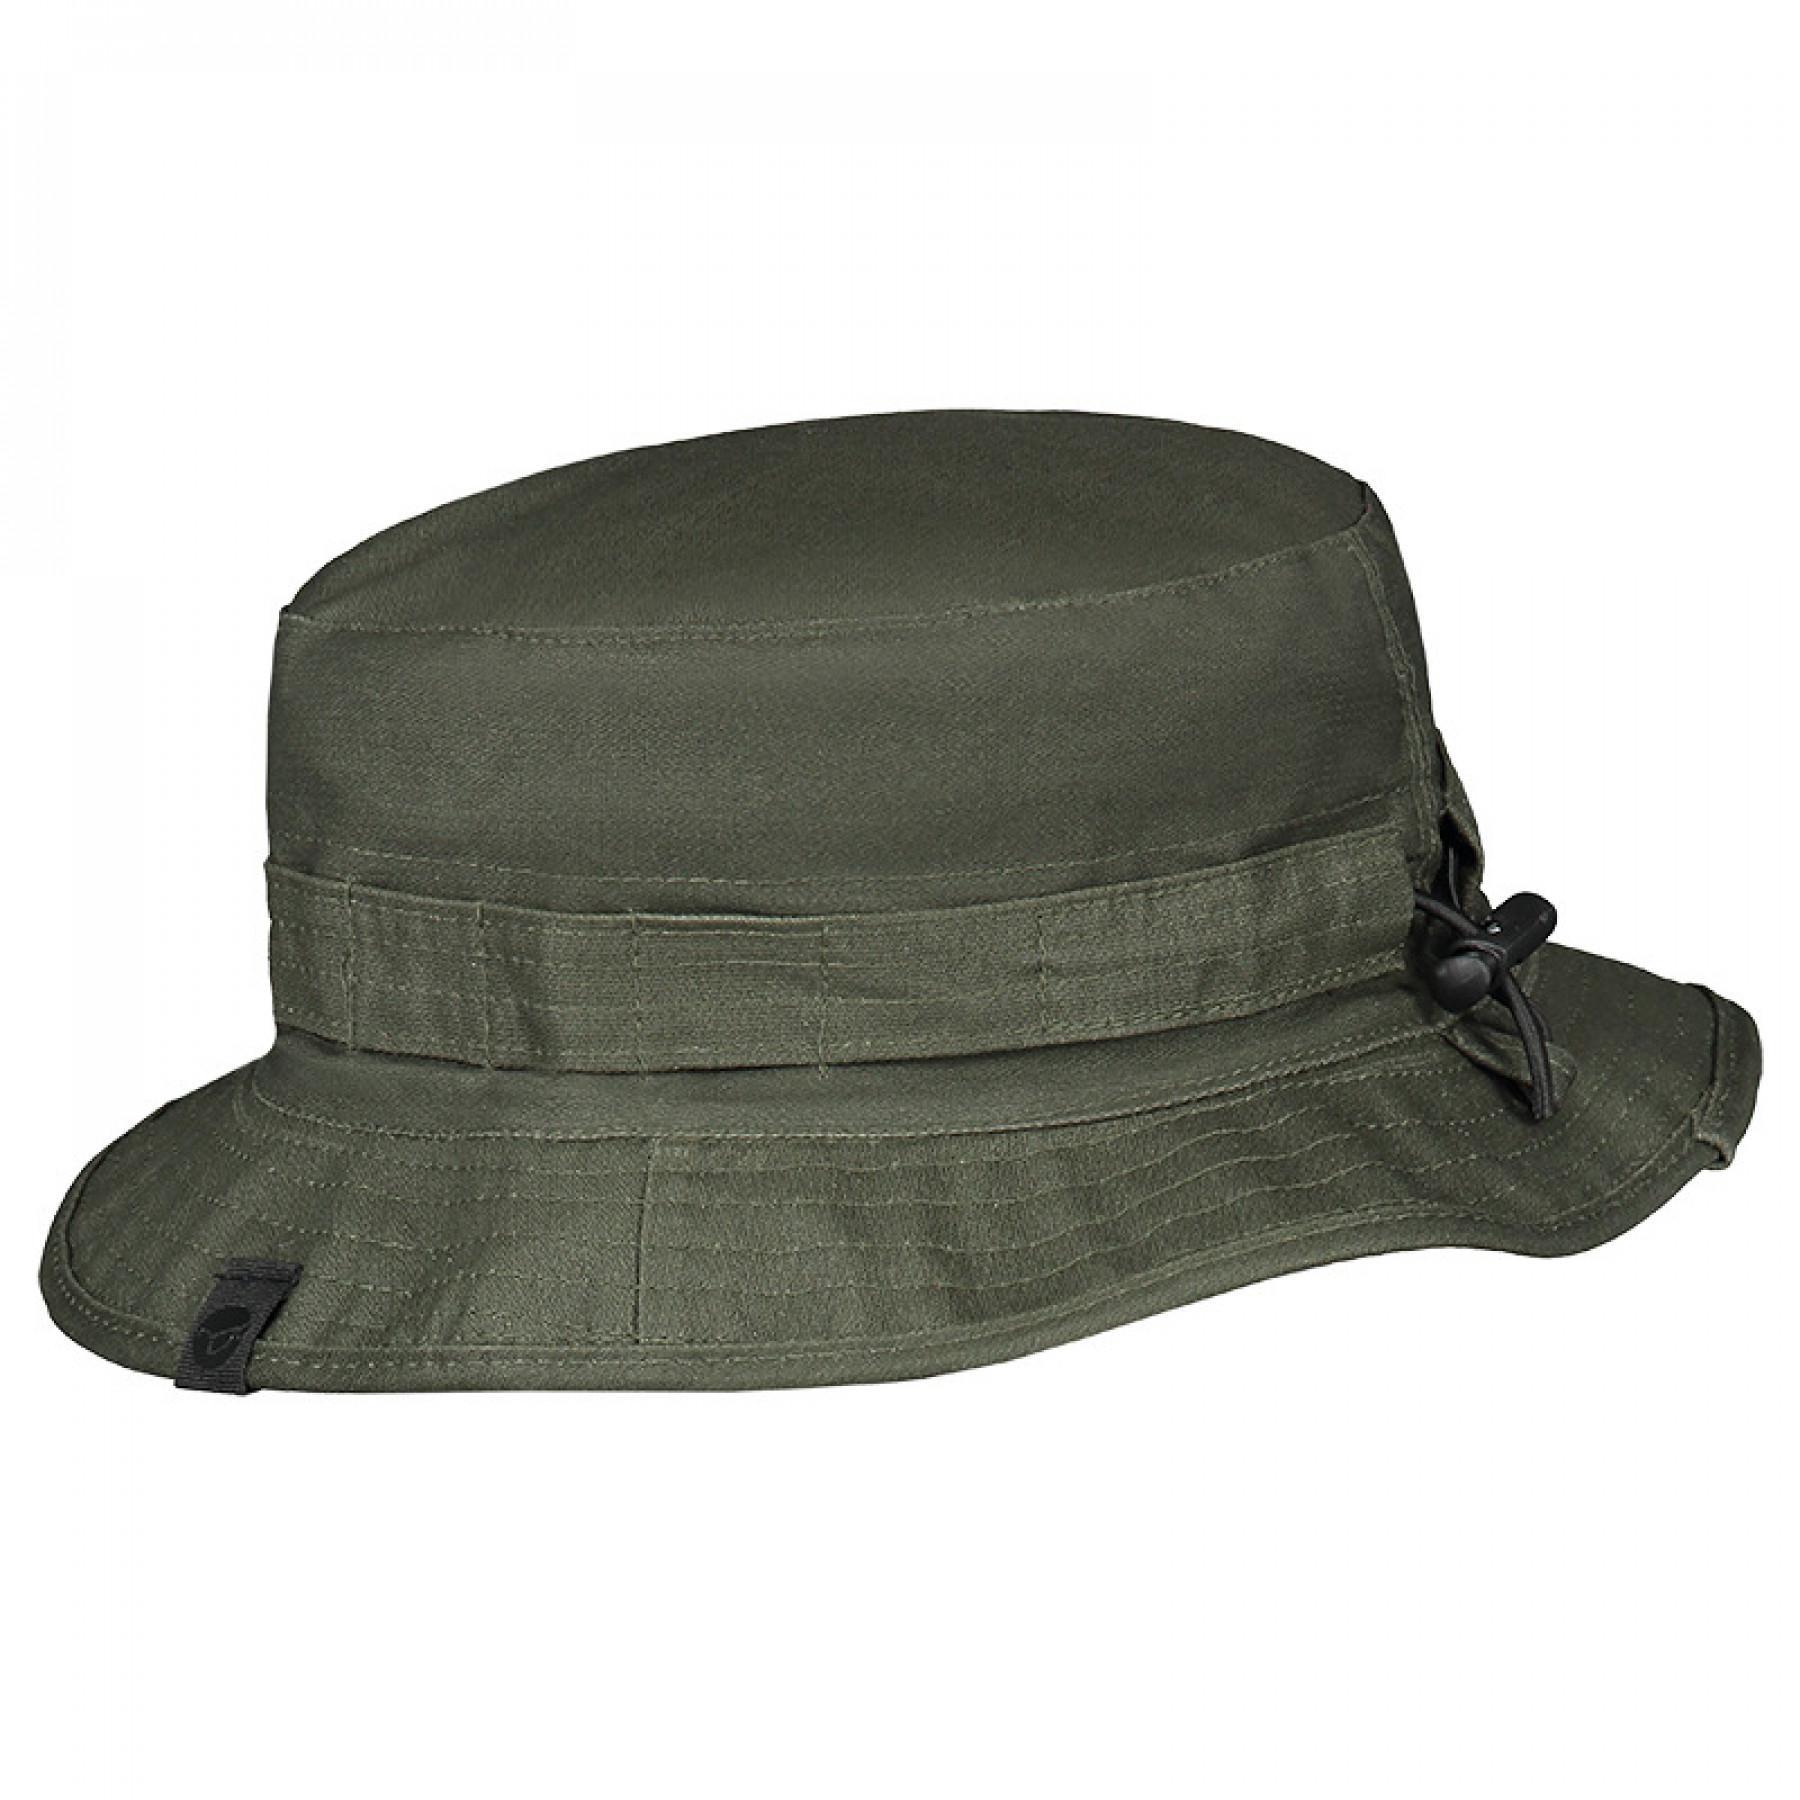 Korda Digi Boonie Hat Limited Edition KBH17 Camouflage for sale online 